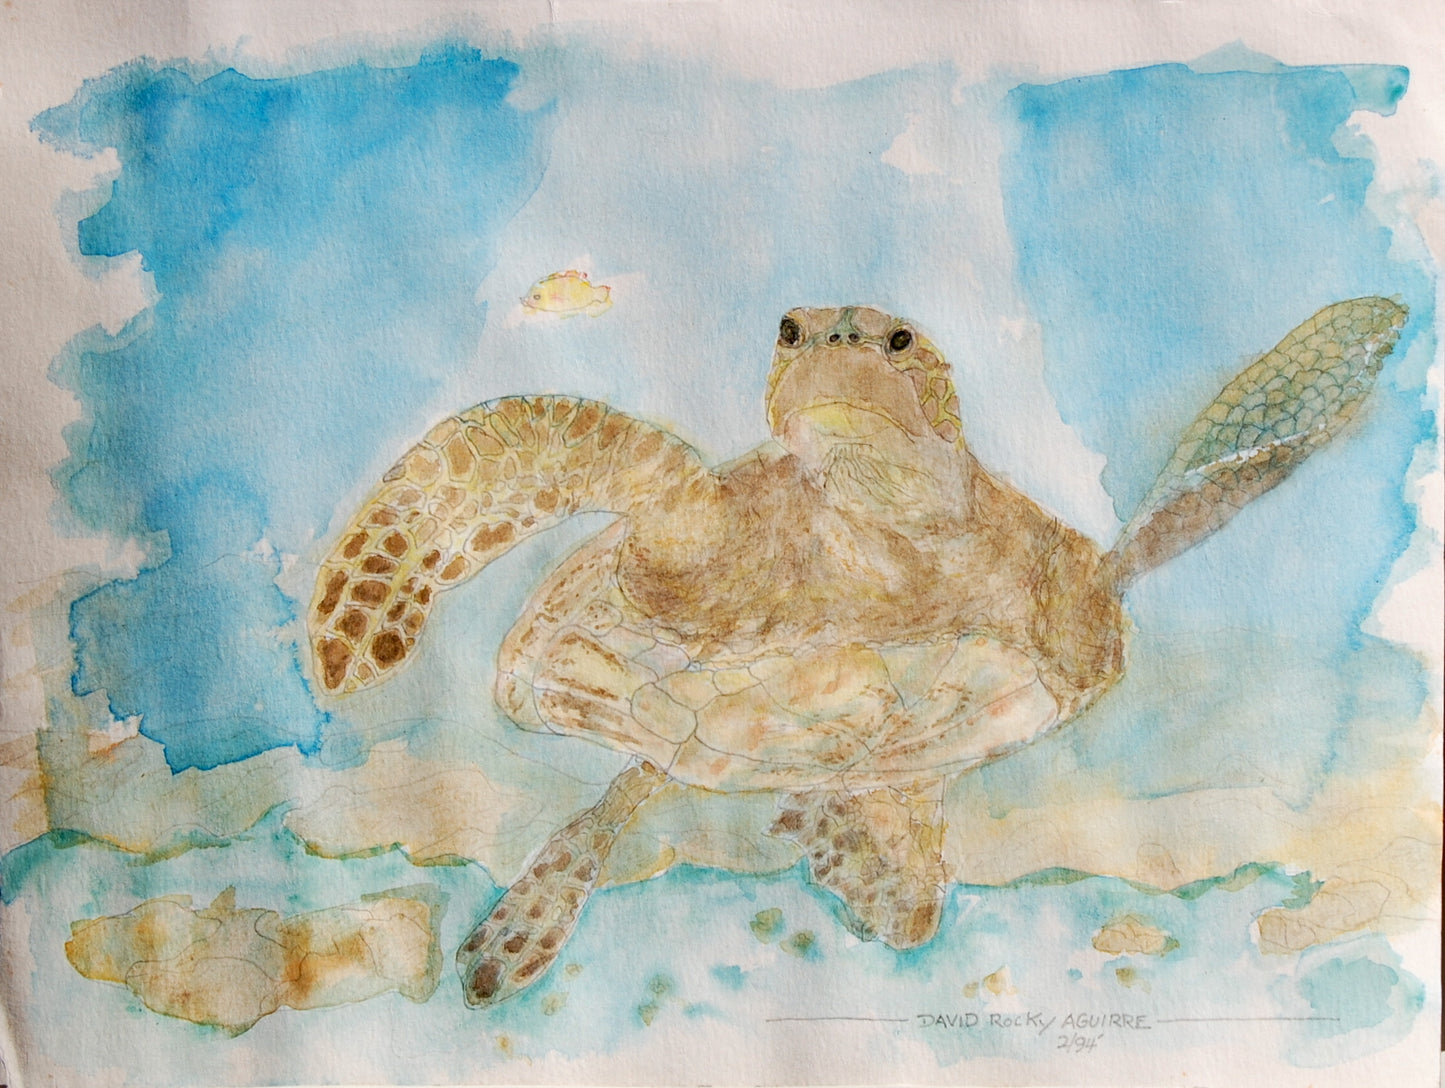 Hawaiian Turtle watercolor painting